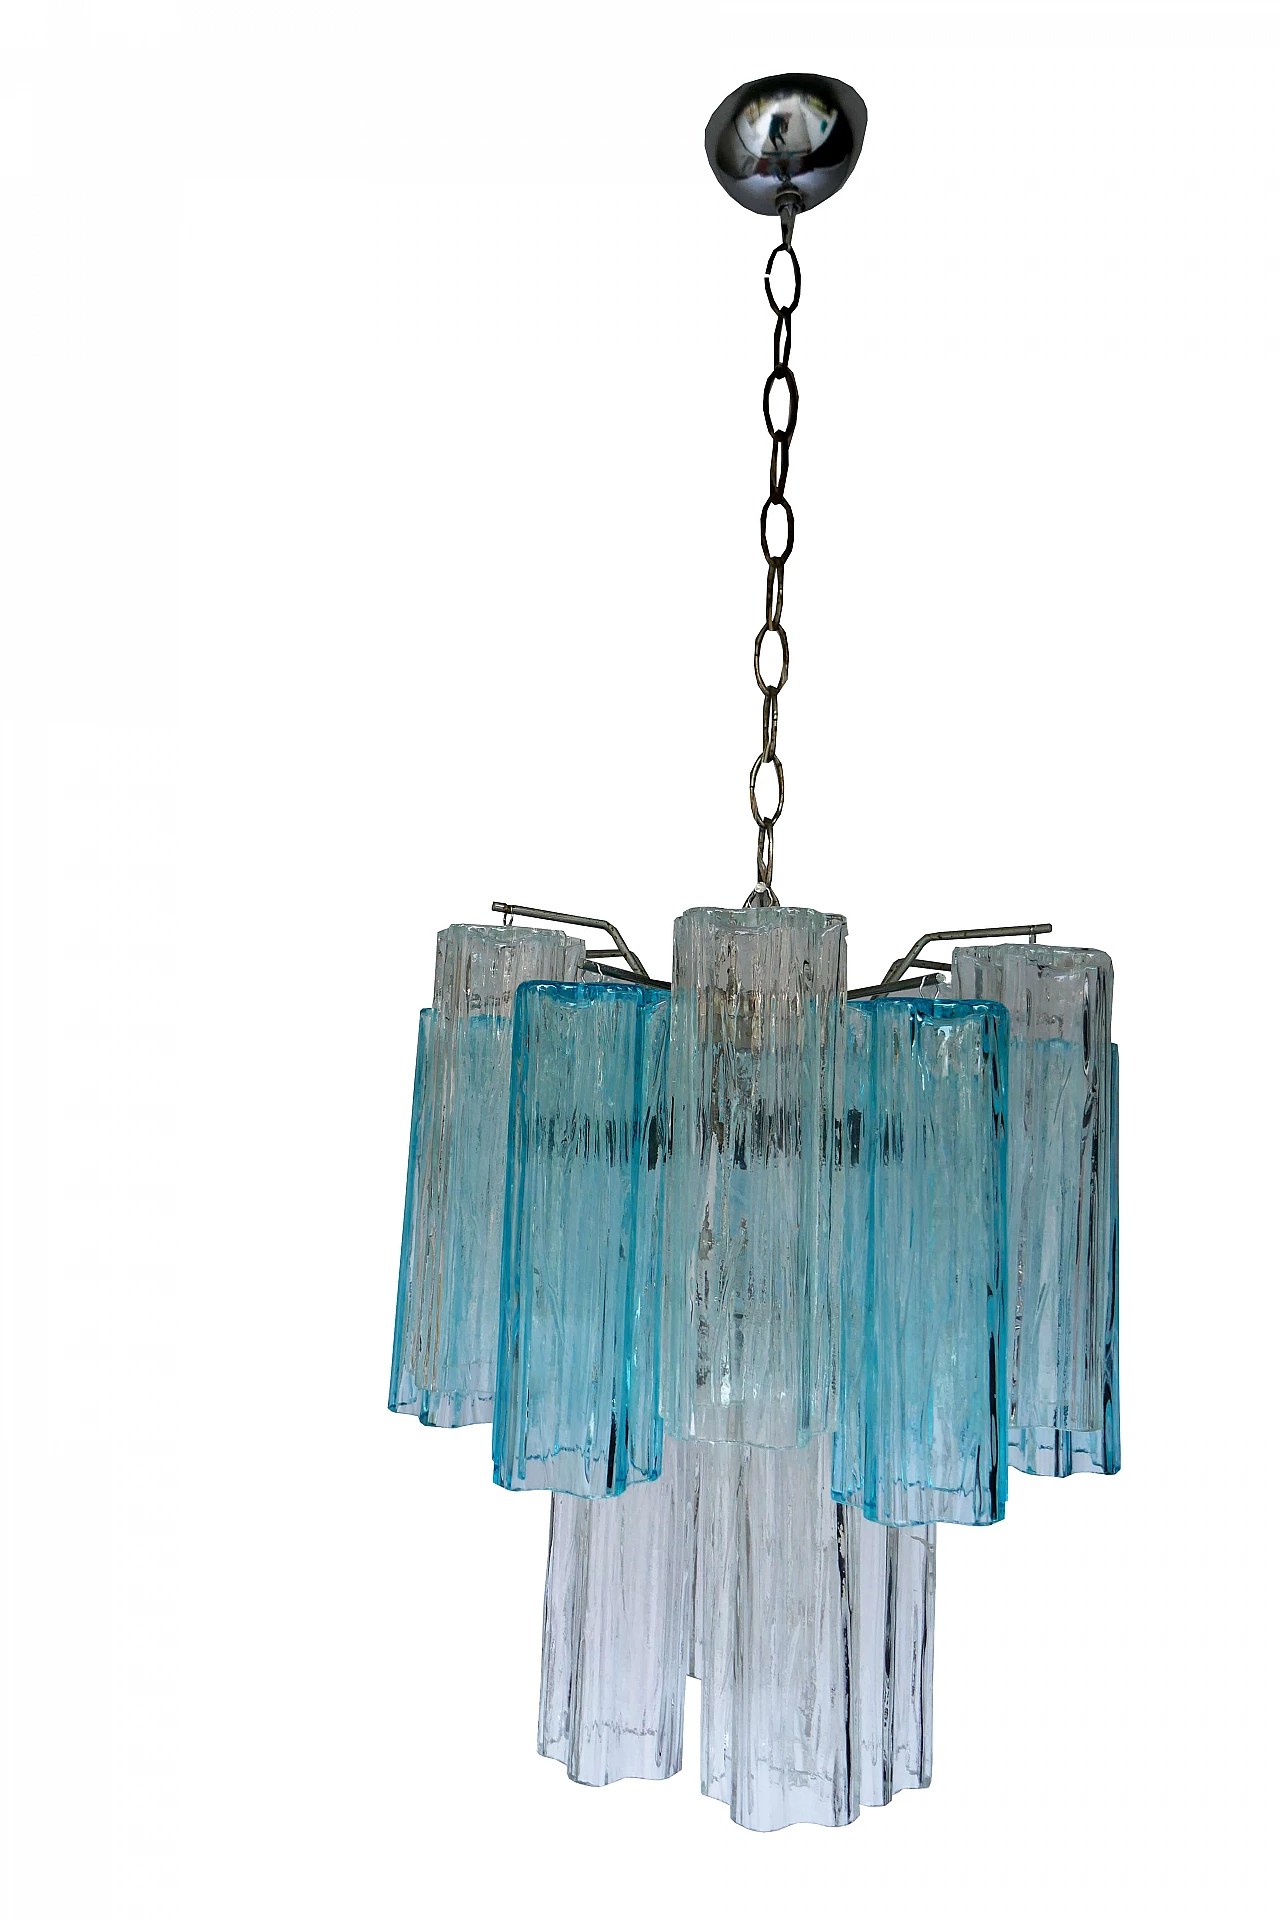 Tronchi glass chandelier for Venini, 1960s 1